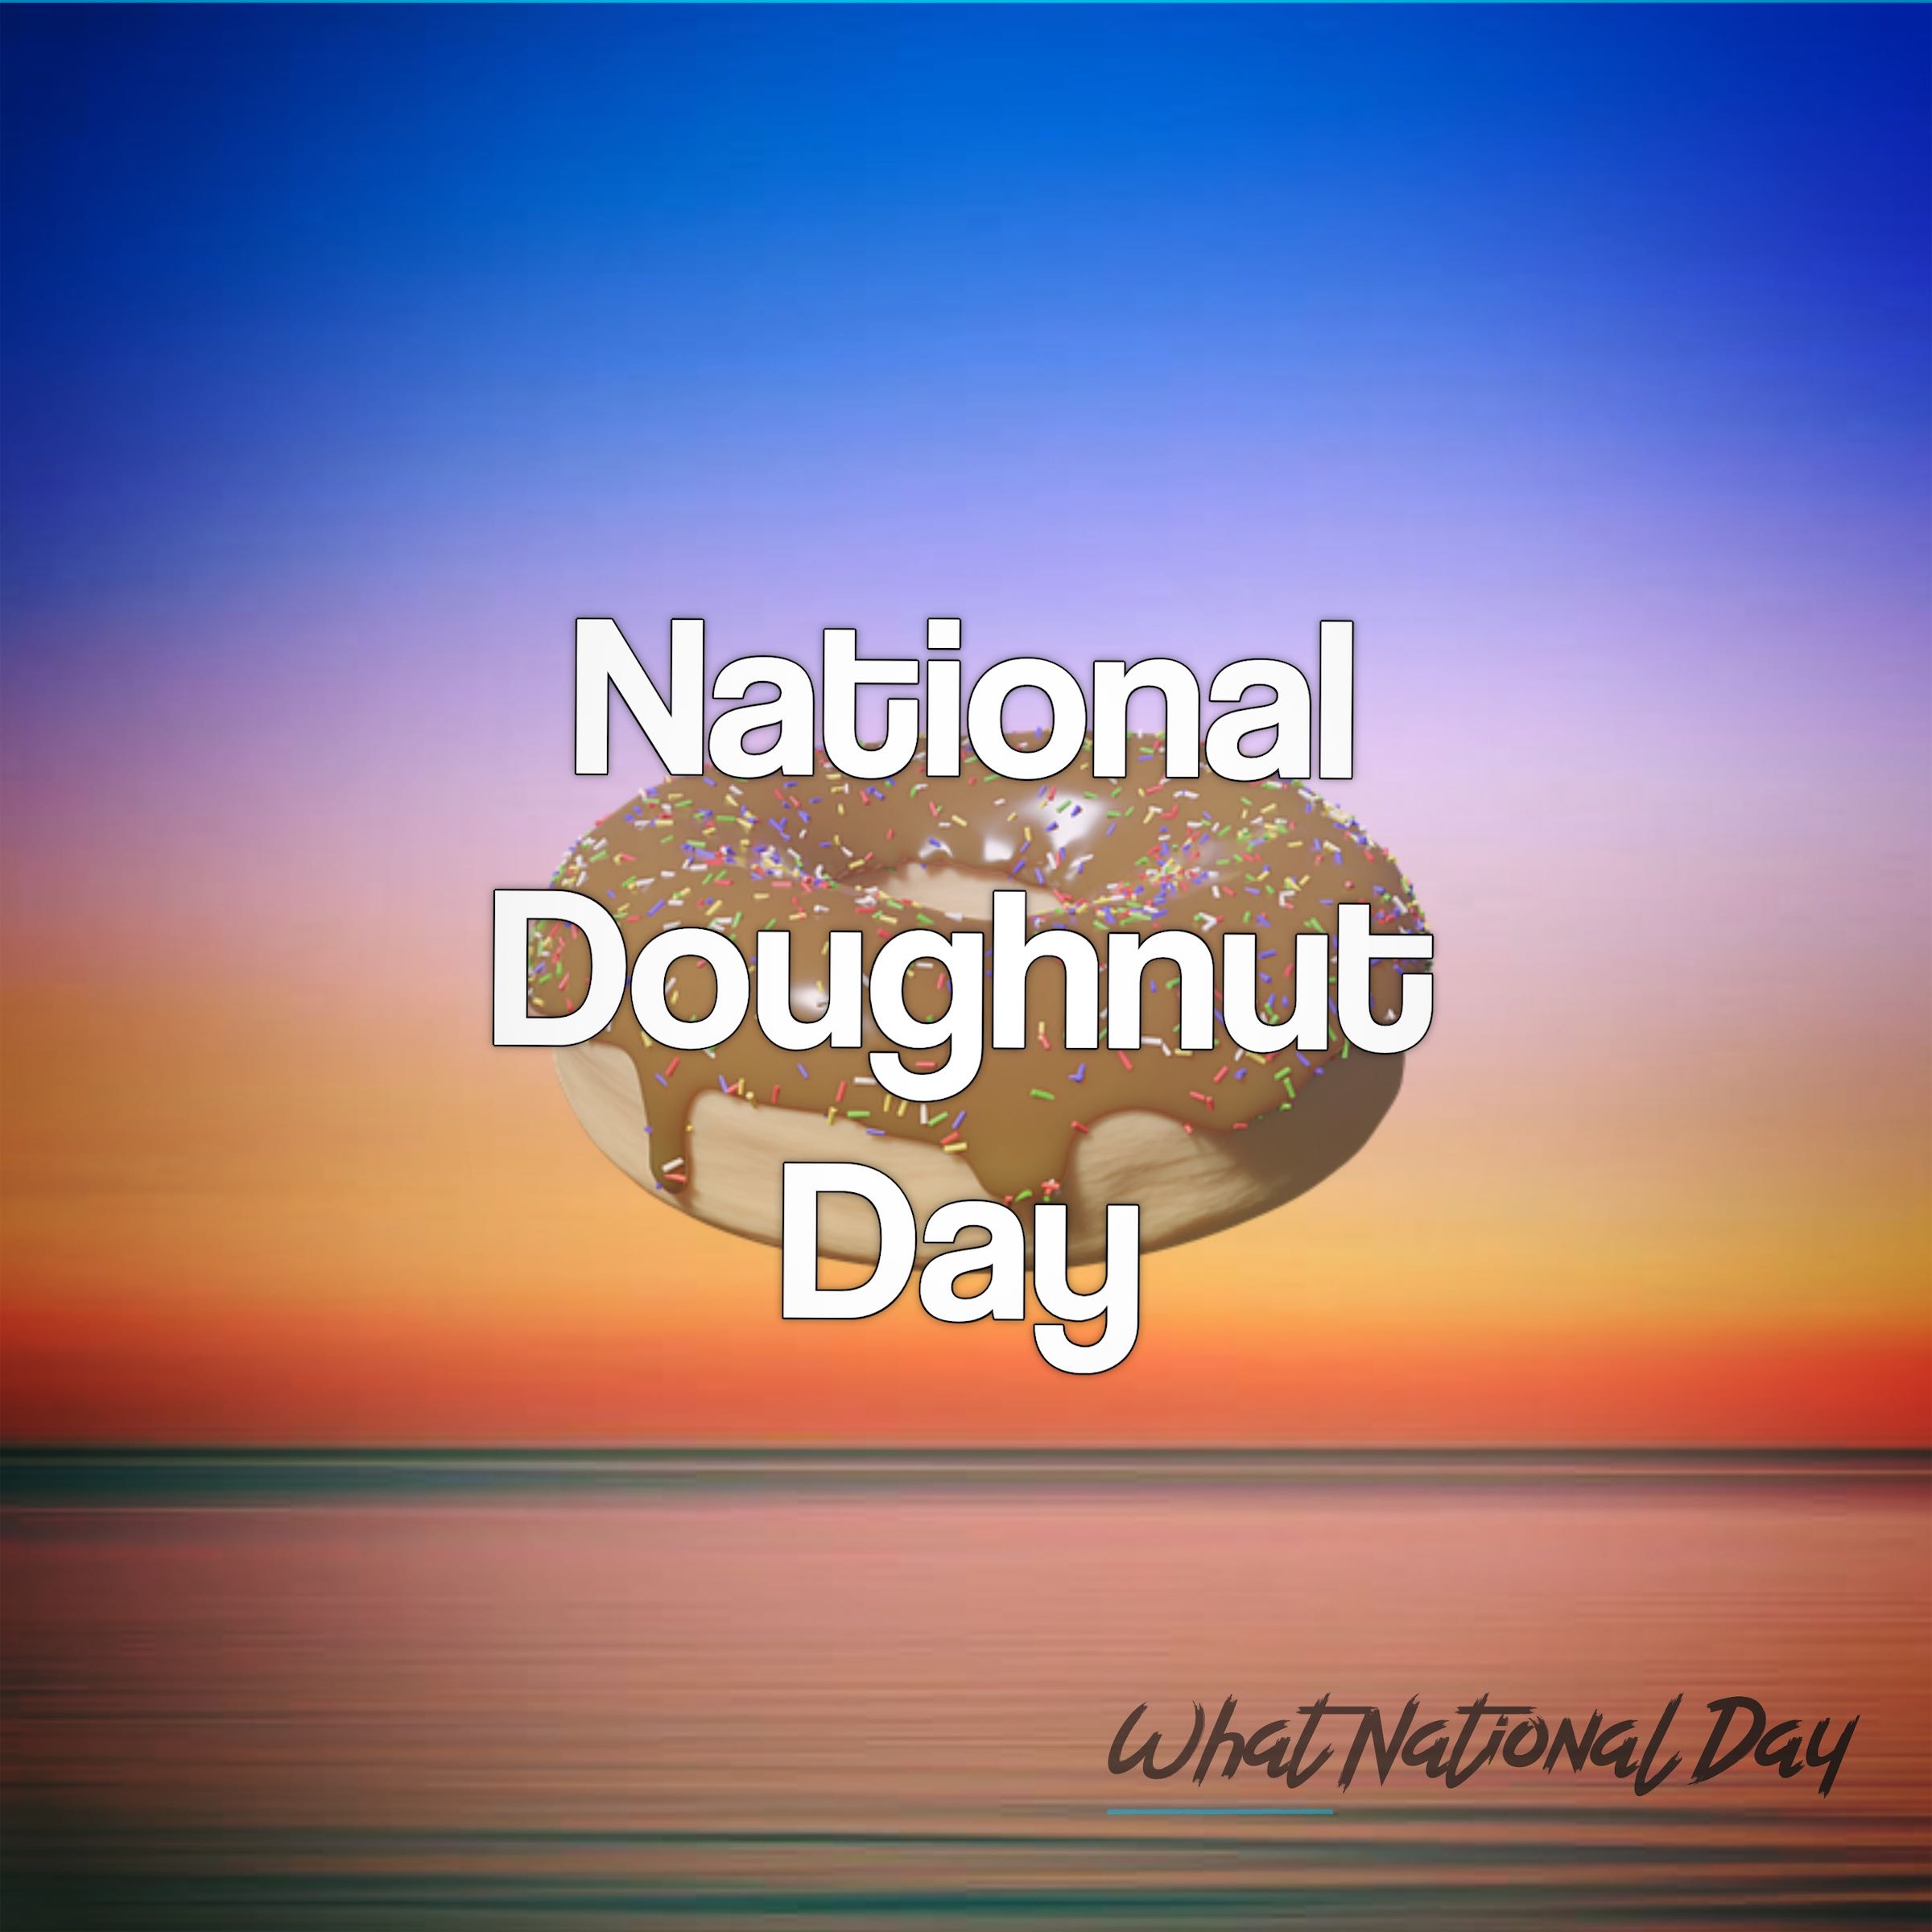 National Doughnut Day